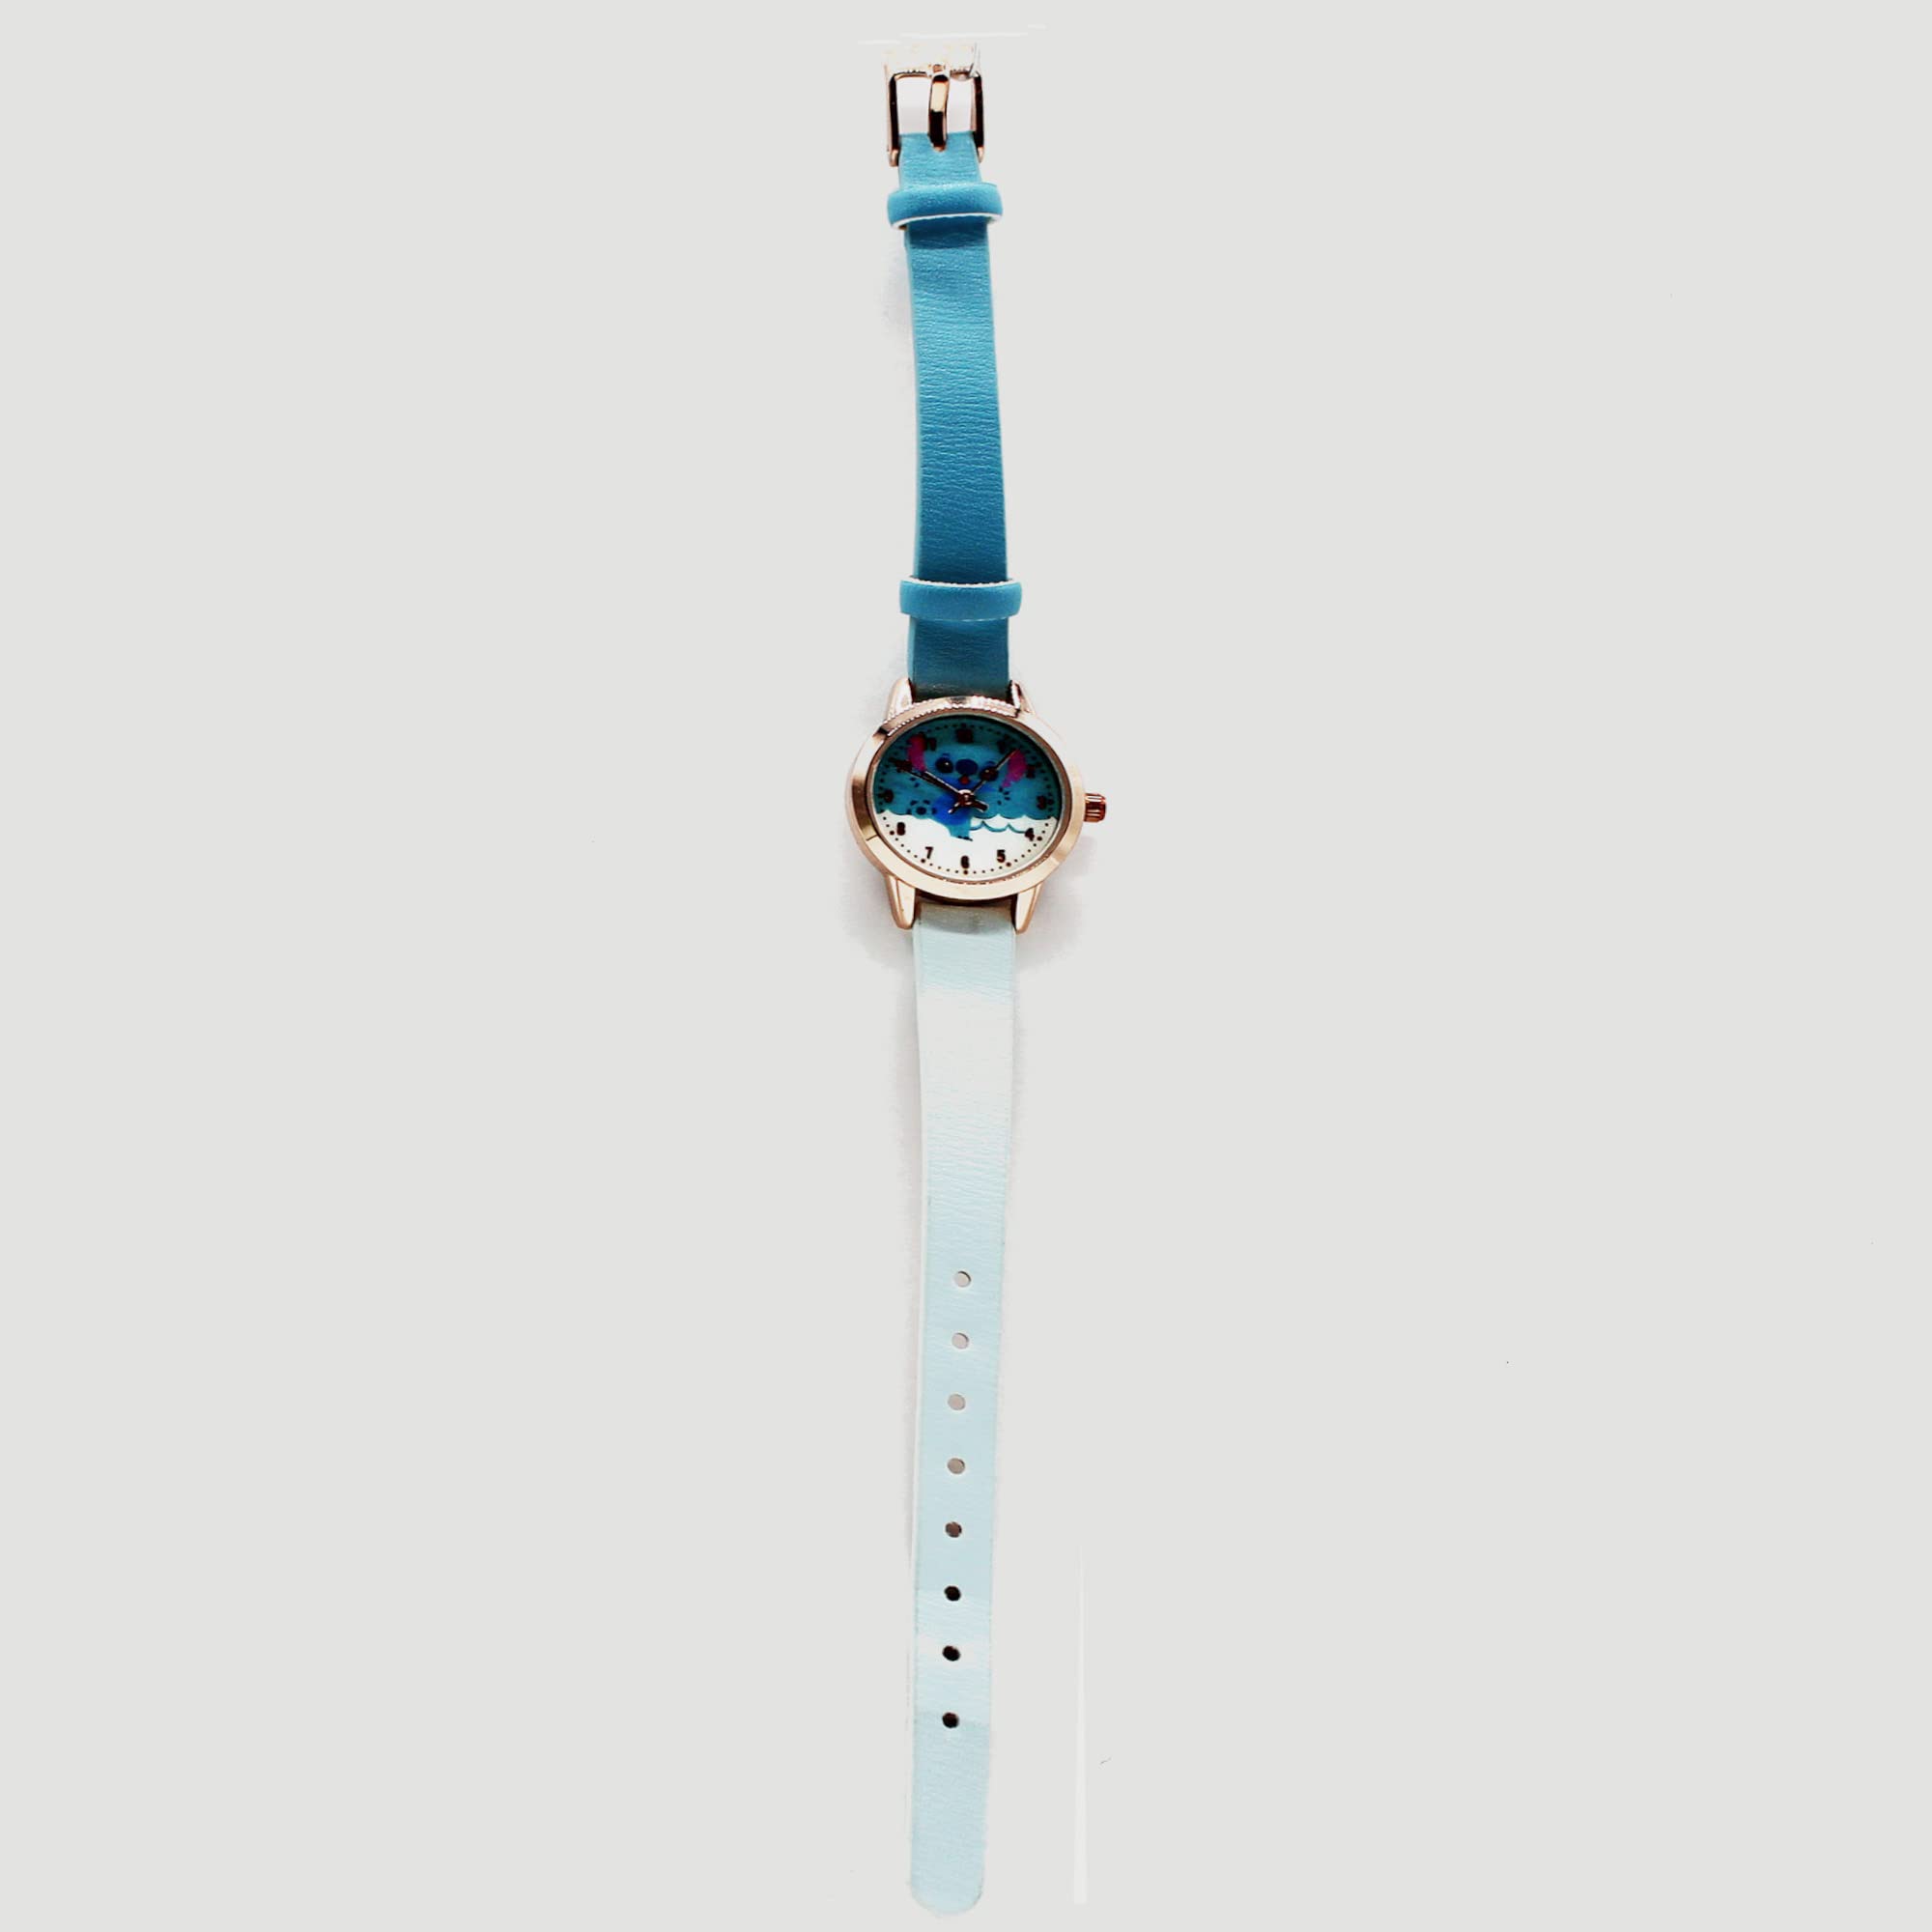 Accutime Women's Disney Lilo & Stitch Blue Gradient Analog Quartz Wrist Watch with Small Face, Gold Accents for Women Adult (Model: LAS5031AZ)